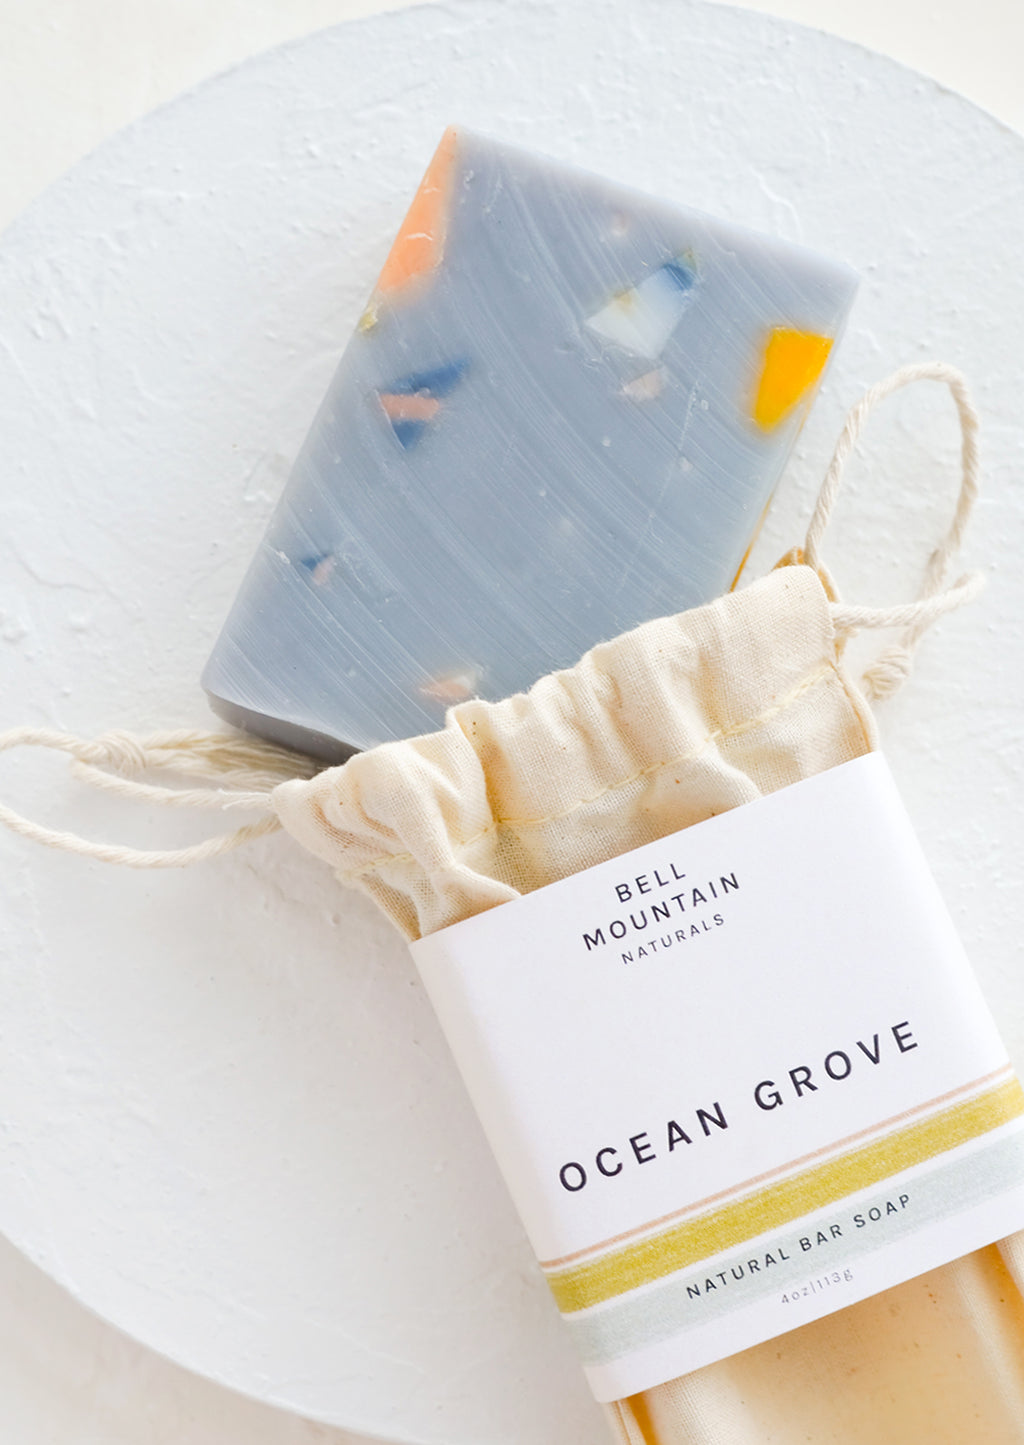 Ocean Grove: A bar soap named "Ocean Grove".